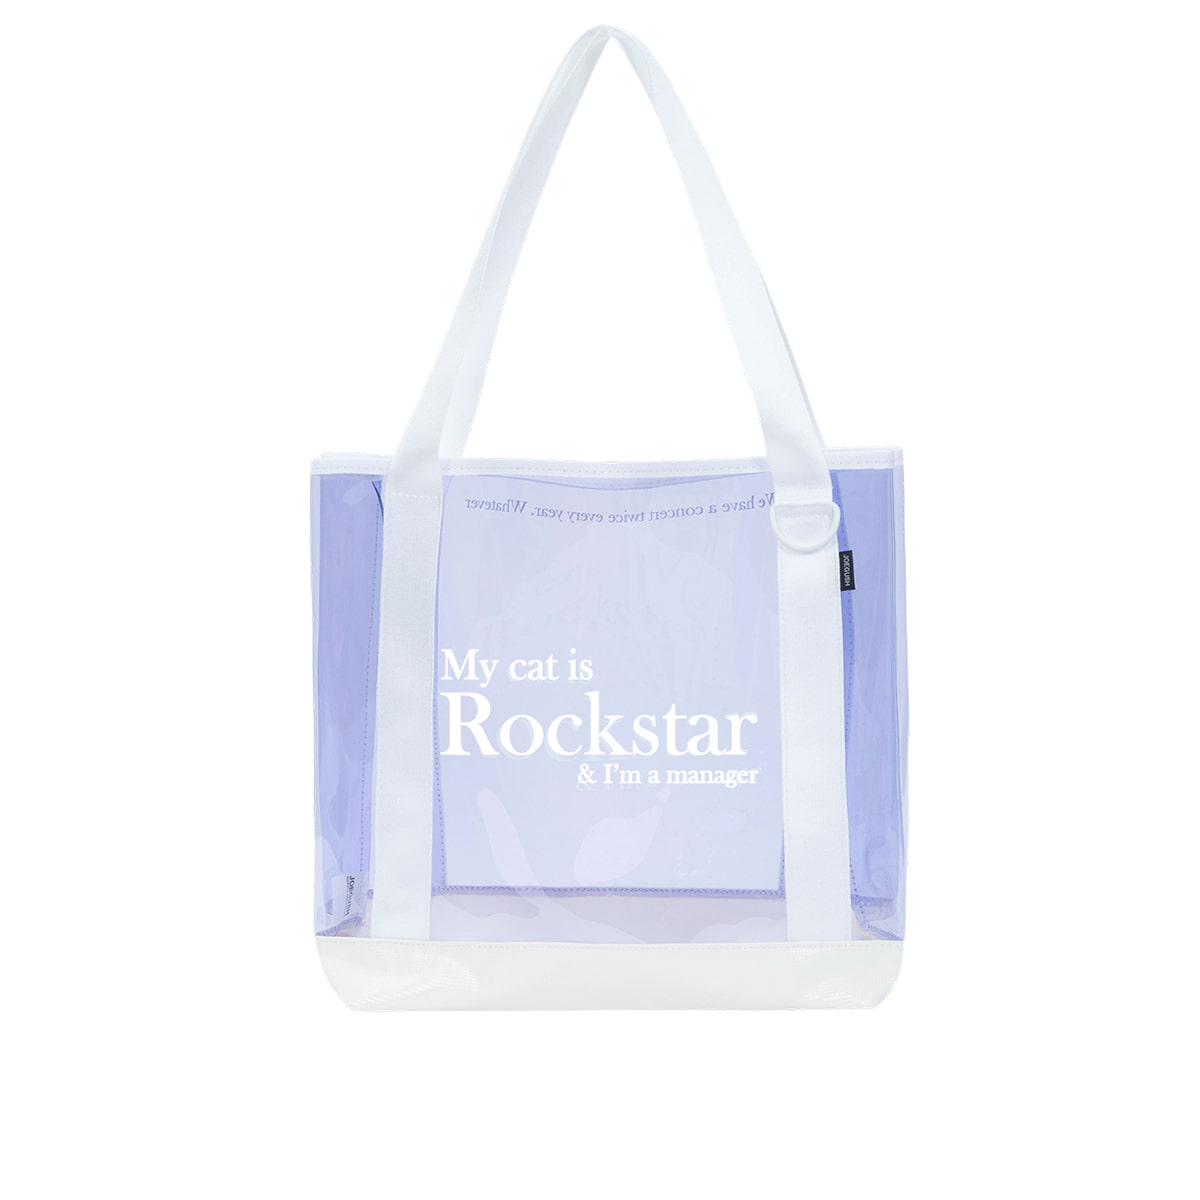 Rockstar pvc tote bag (White/Violet)